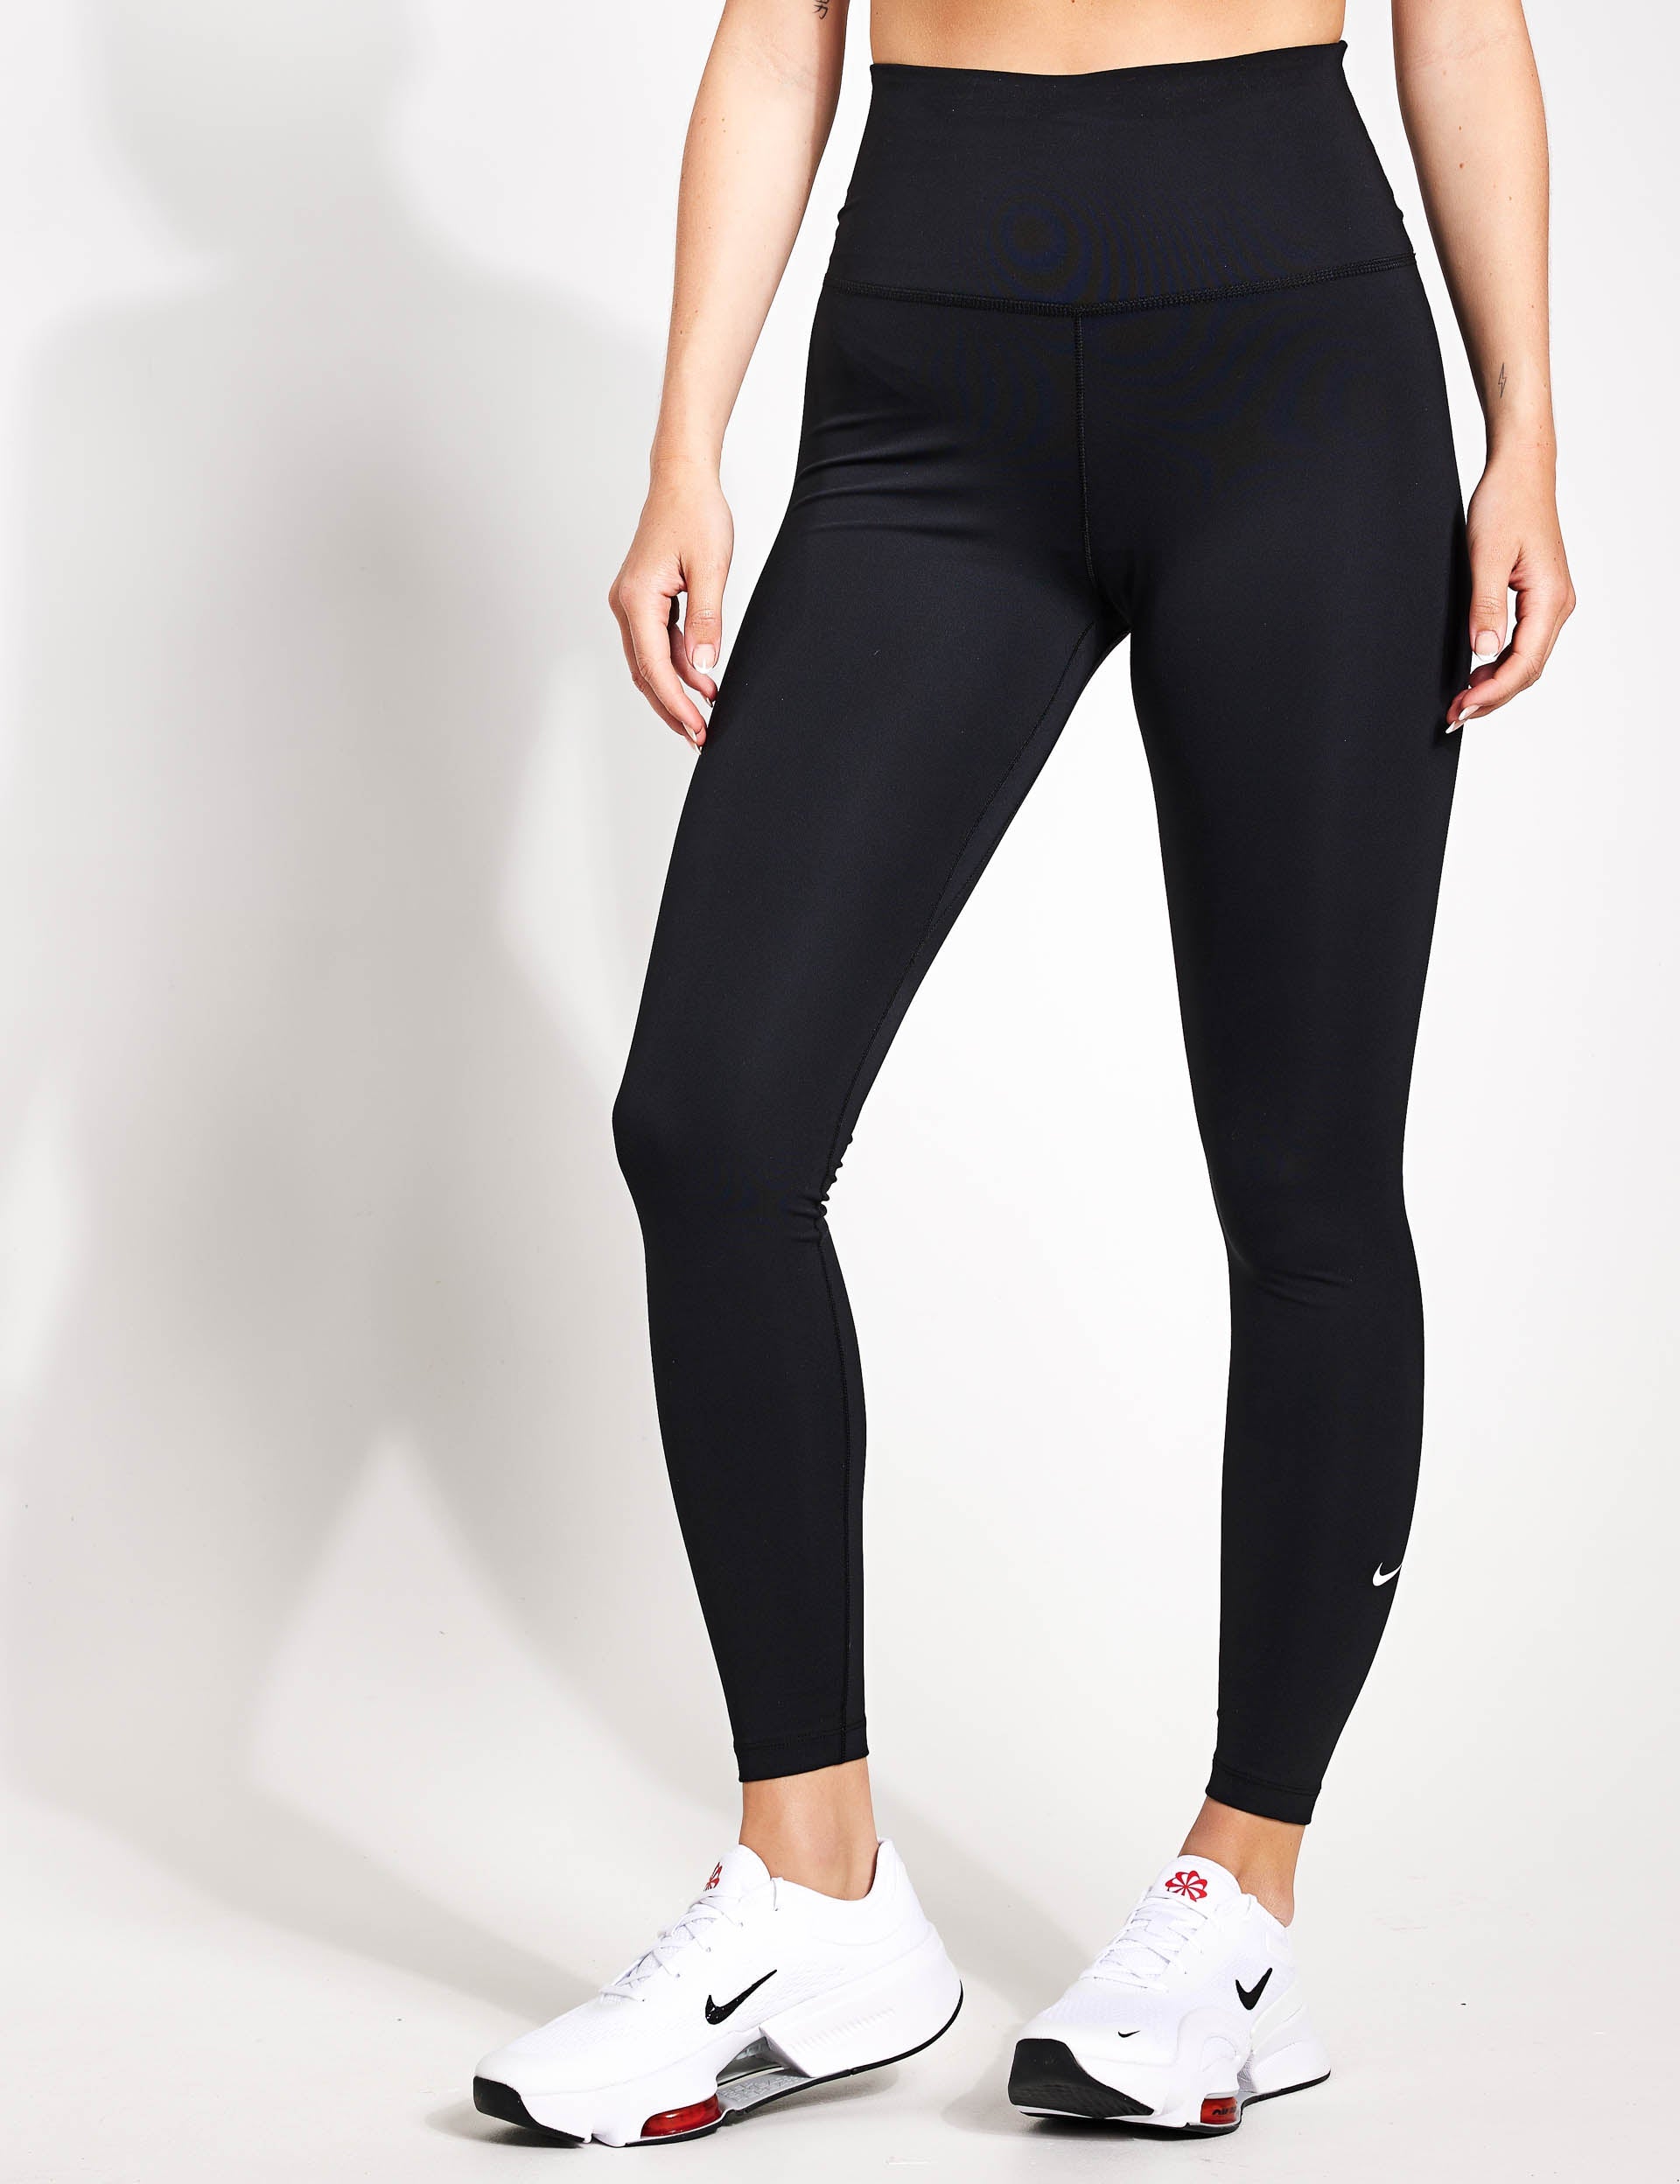 Nike Yoga Luxe High-Waisted 7/8 Color Block Leggings Black Gray sz XL